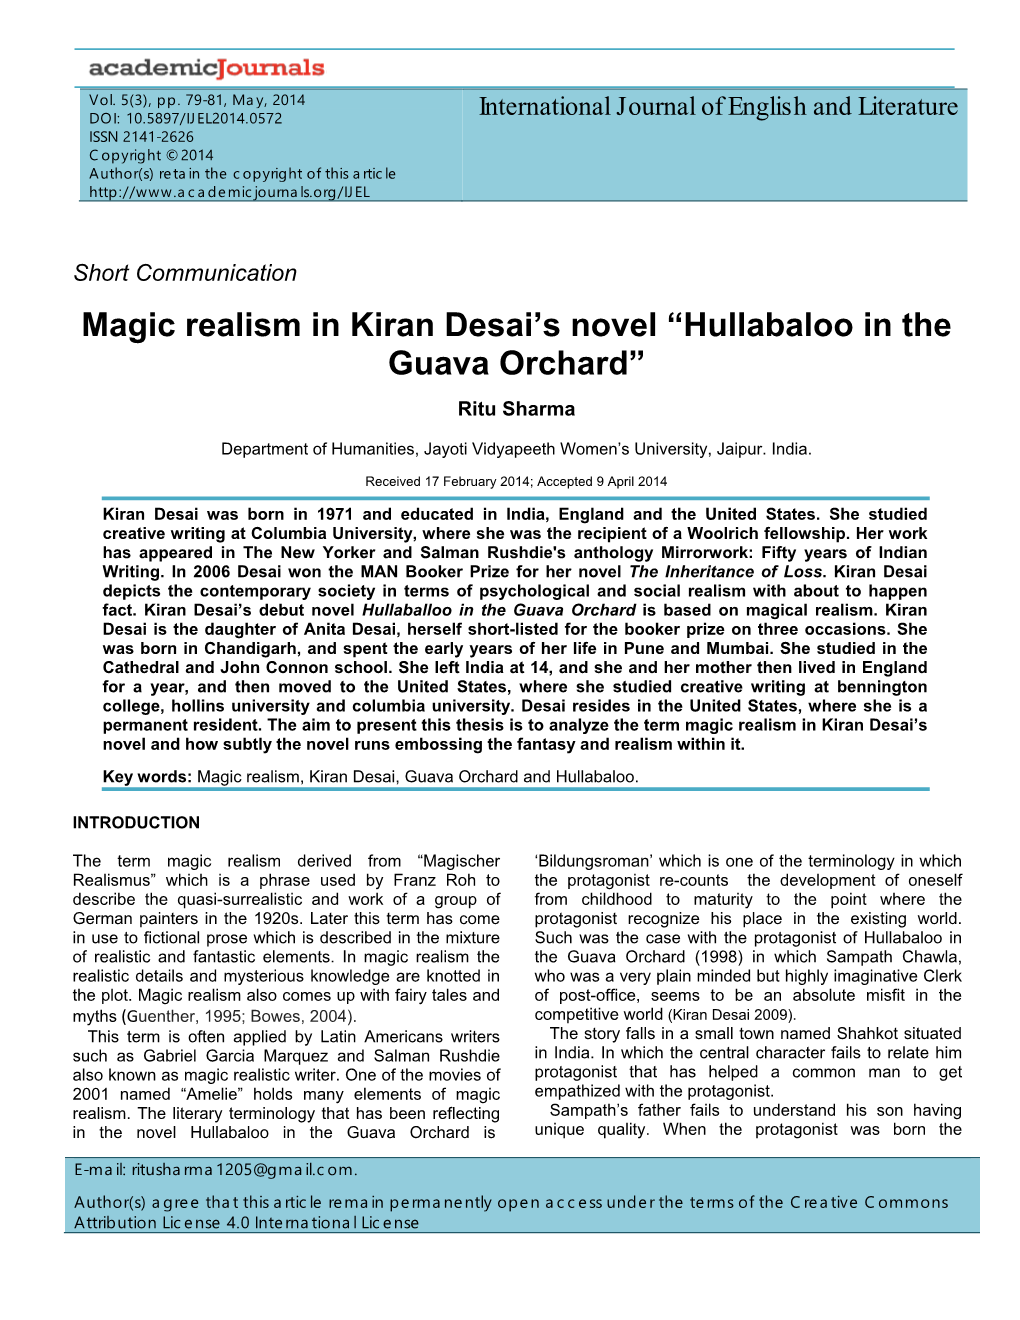 Magic Realism in Kiran Desai's Novel “Hullabaloo in the Guava Orchard”